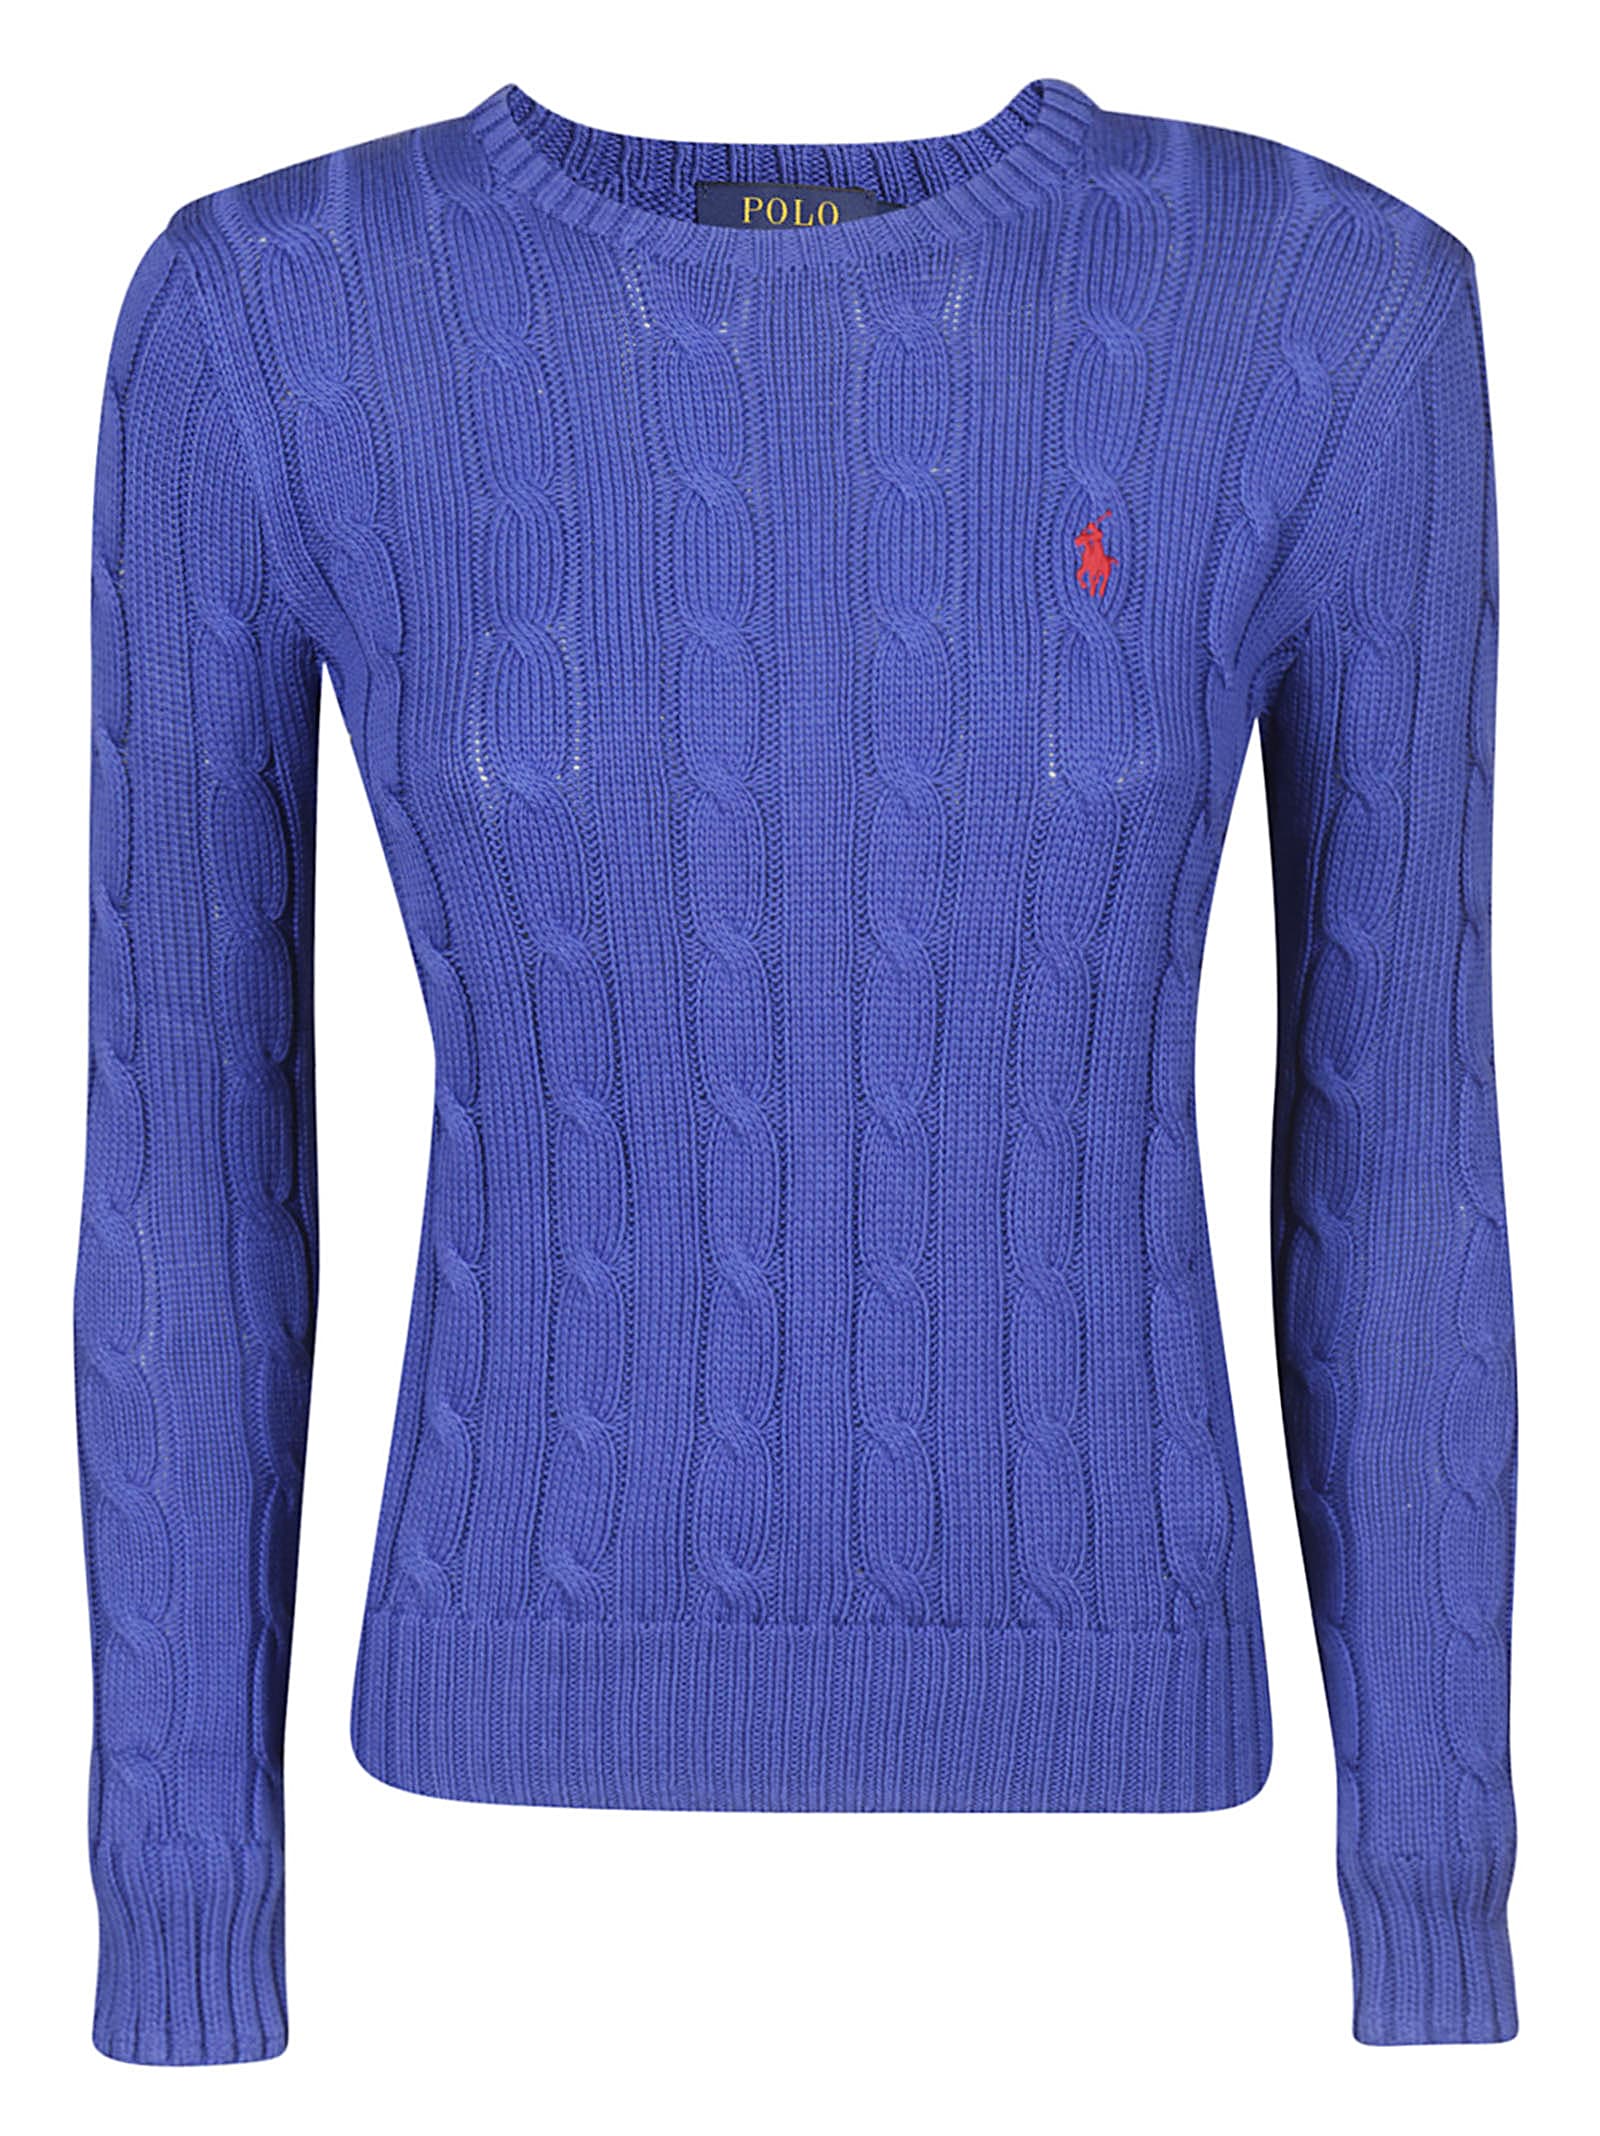 royal blue polo sweater